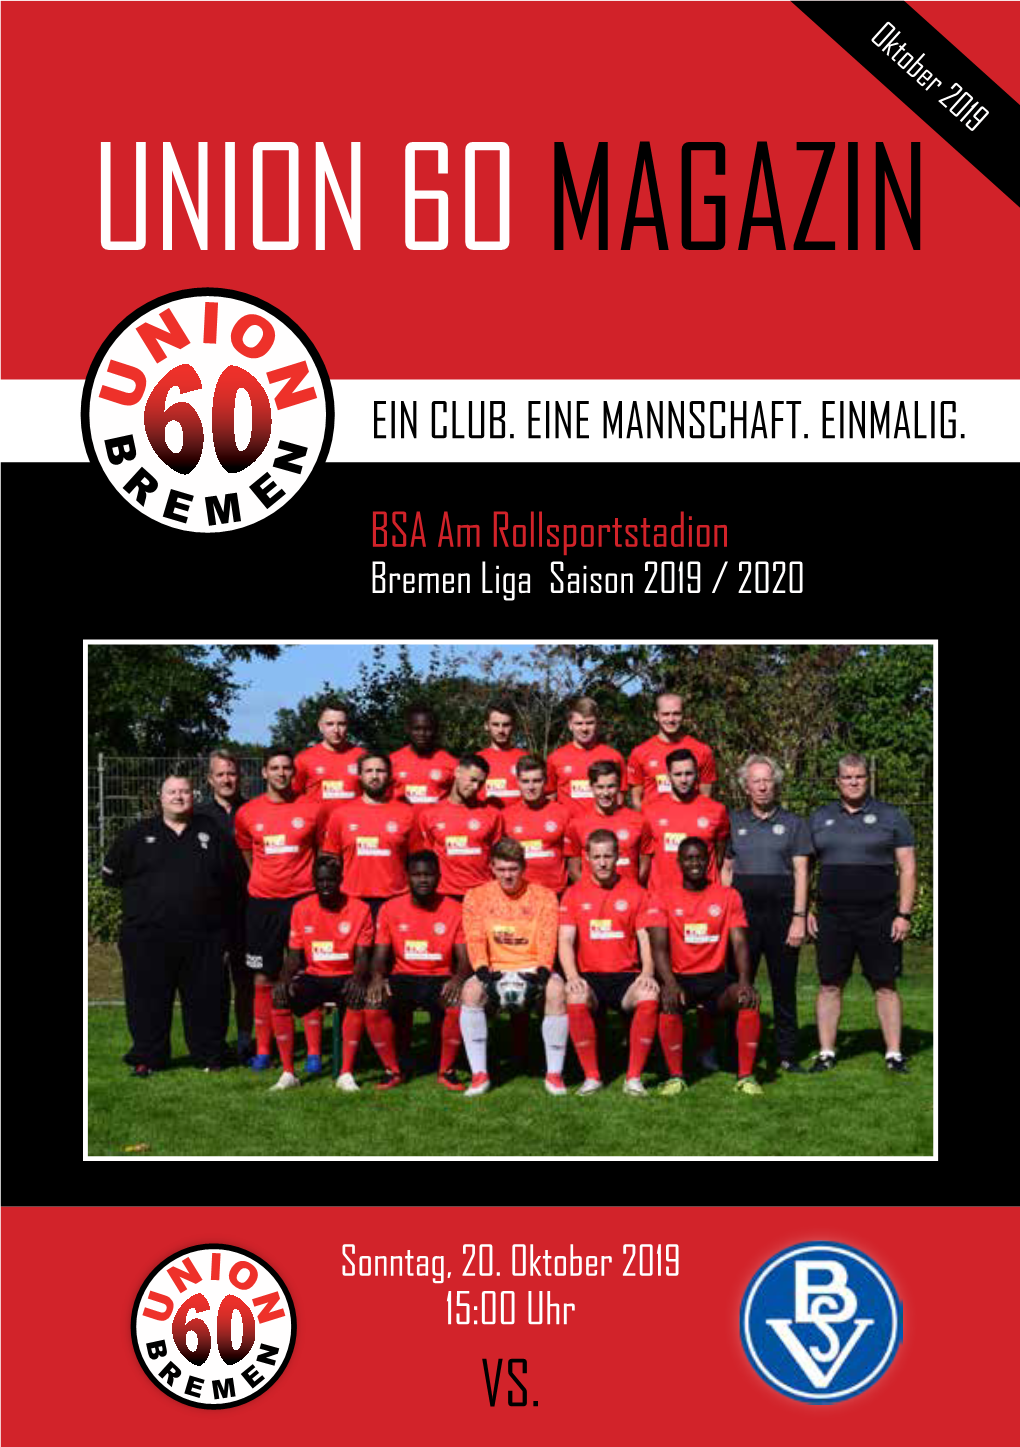 Union 60 Magazin